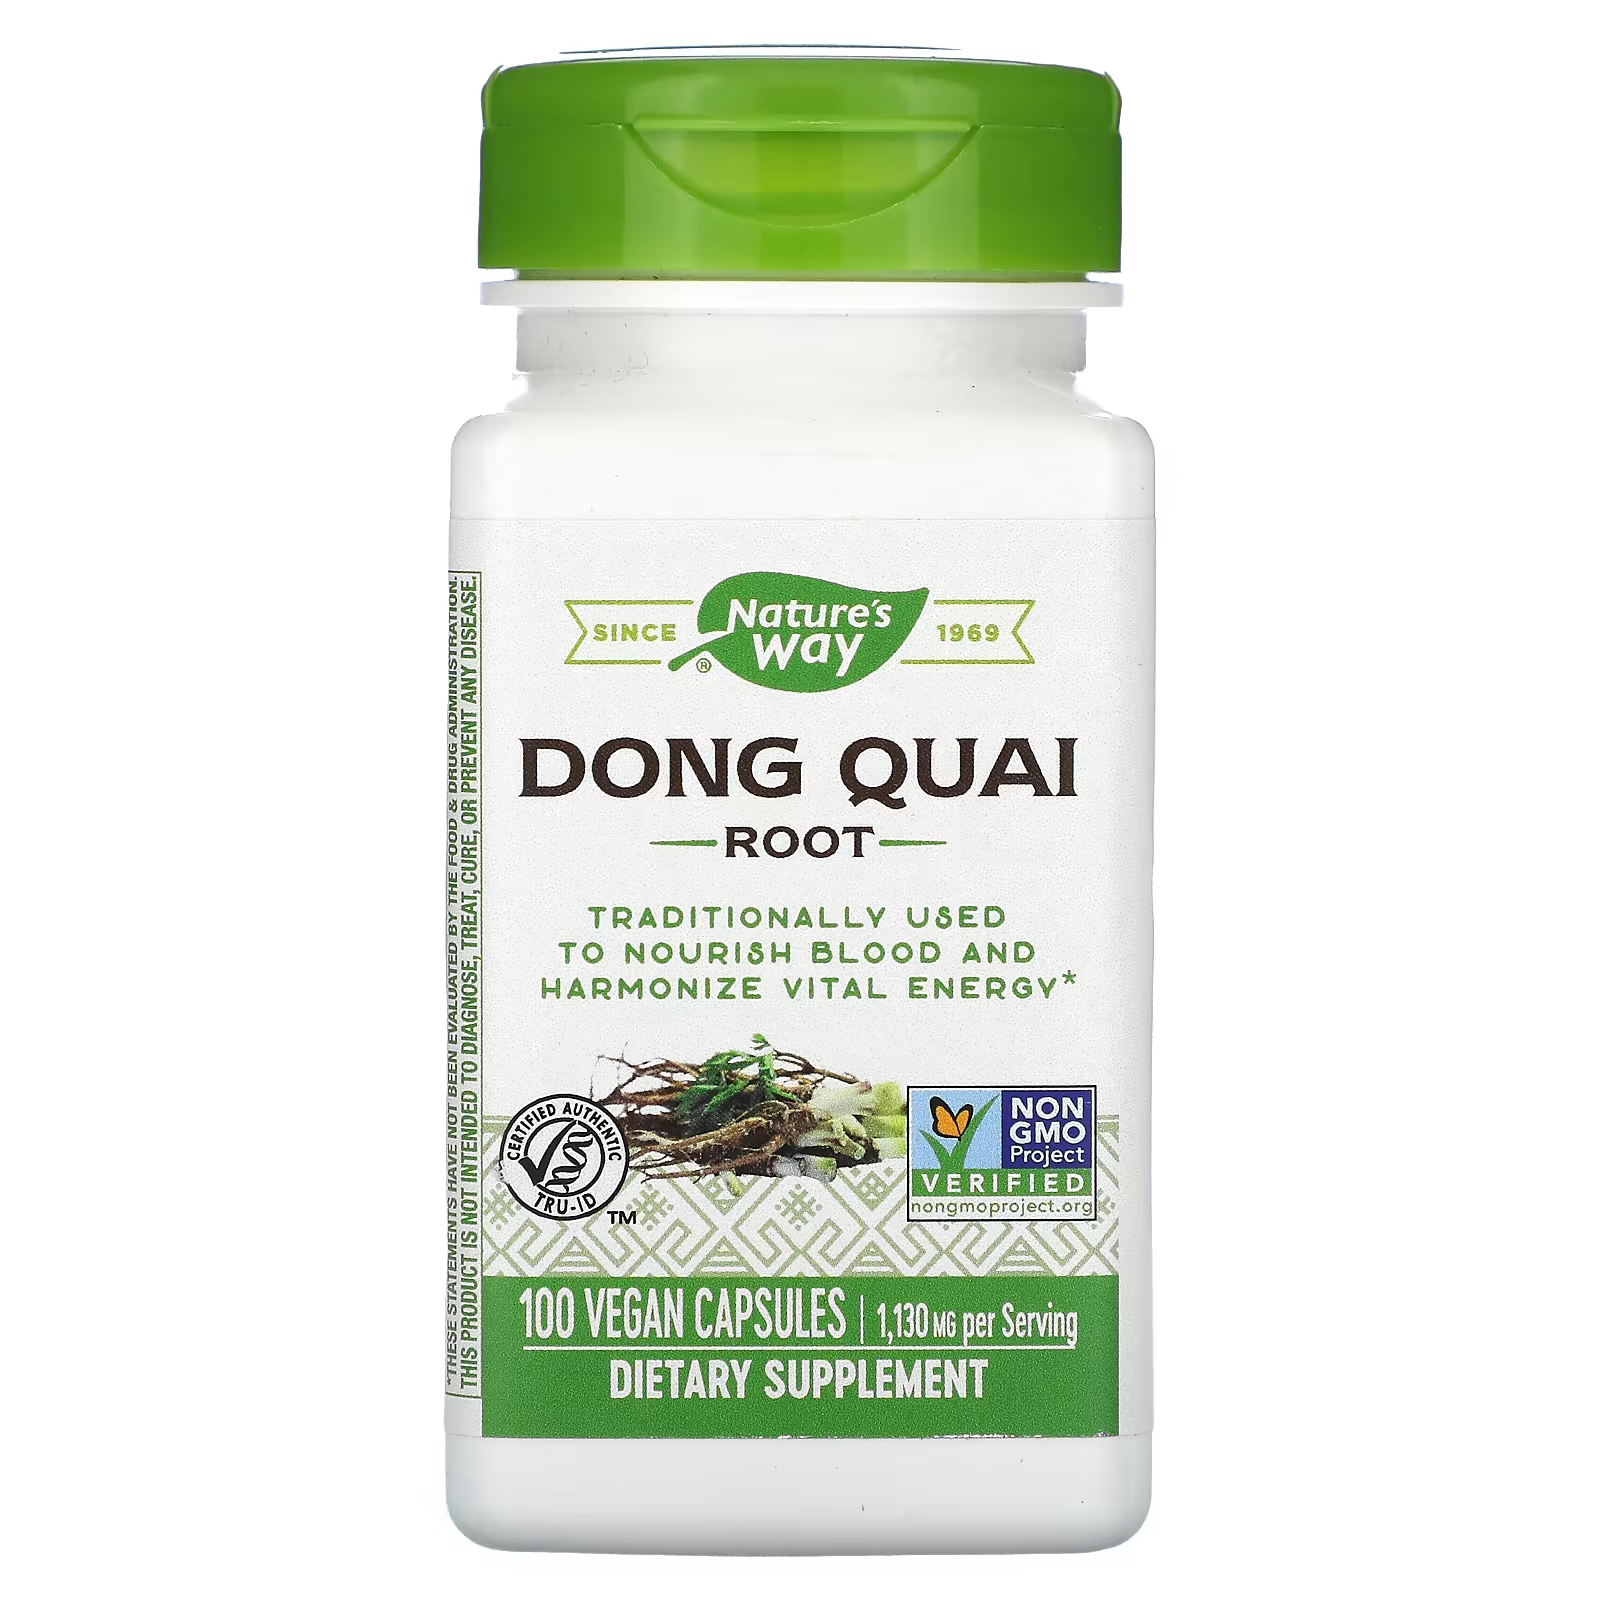 Пищевая добавка Nature's Way Dong Quai Root 1130 мг, 100 веганских капсул биологически активная добавка solgar dong quai root extract 100 шт